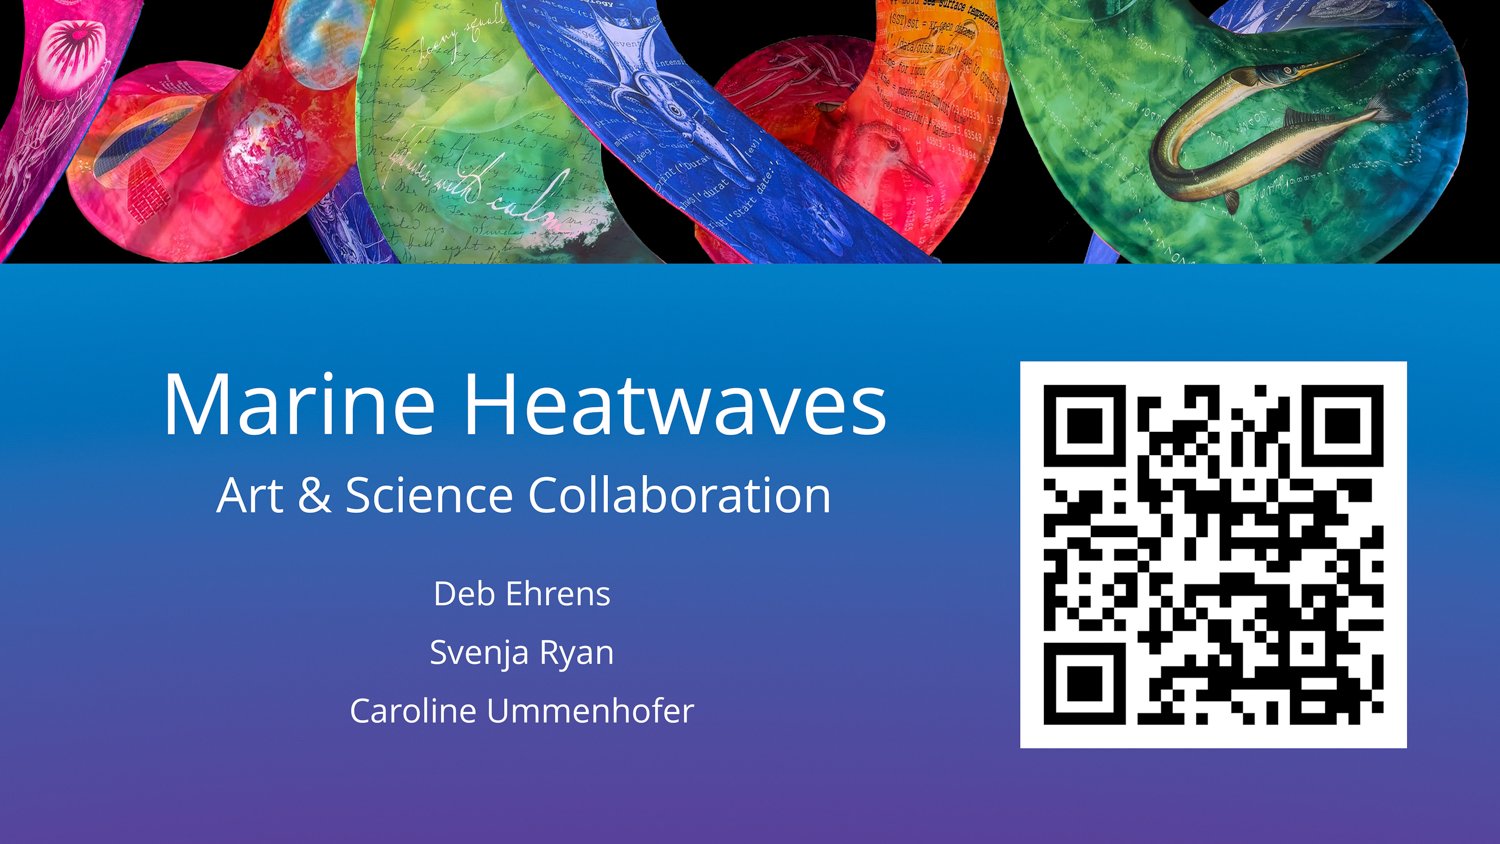 Marine Heatwaves: An Art & Science Collaboration